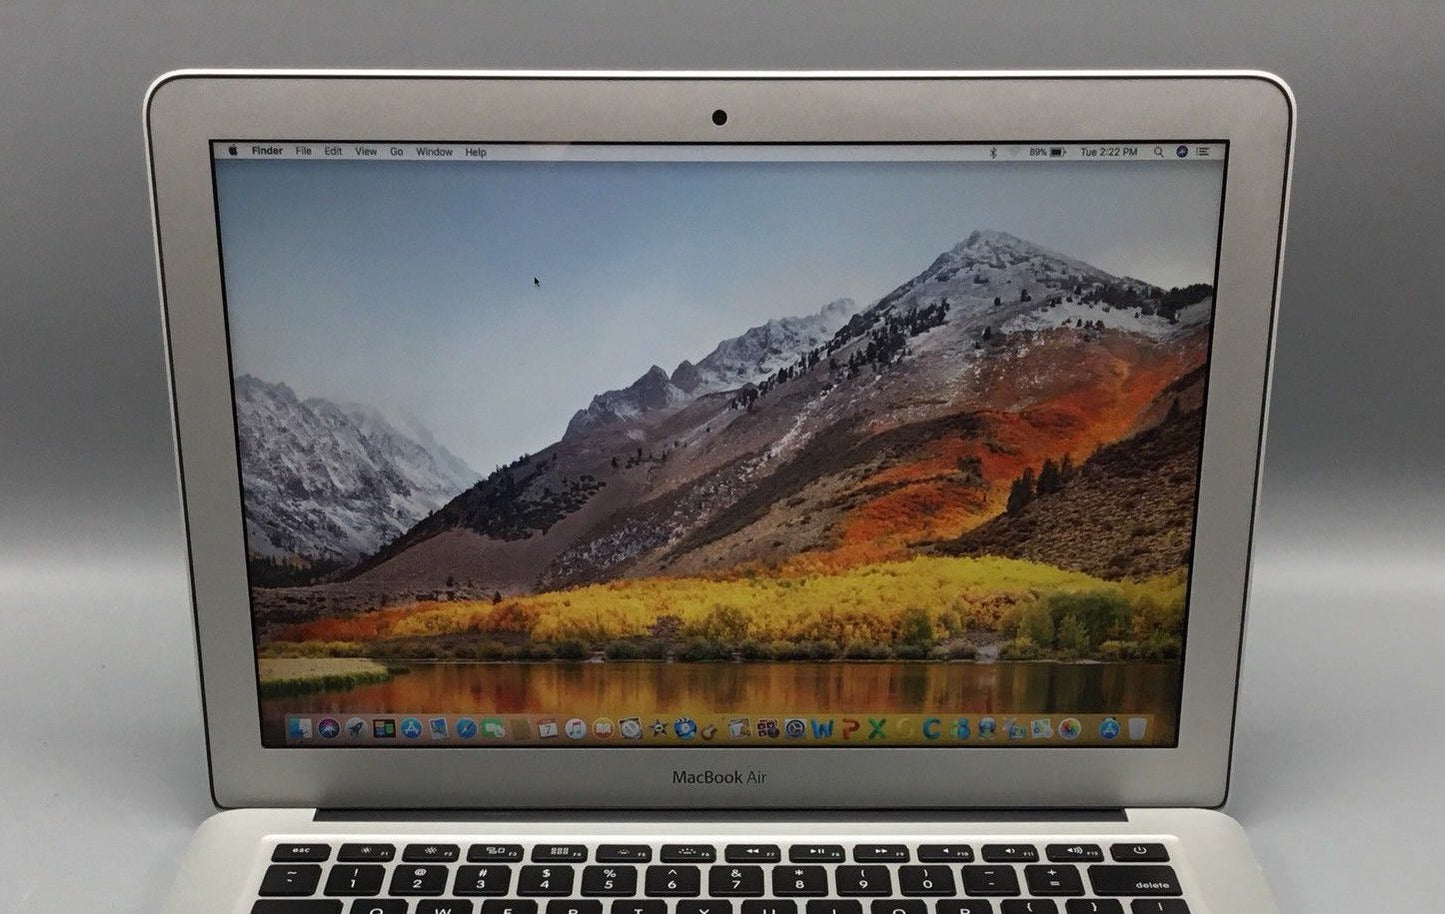 Apple MacBook Air | A1466 | CORE i5 | RAM 8GB | SSD 128GB